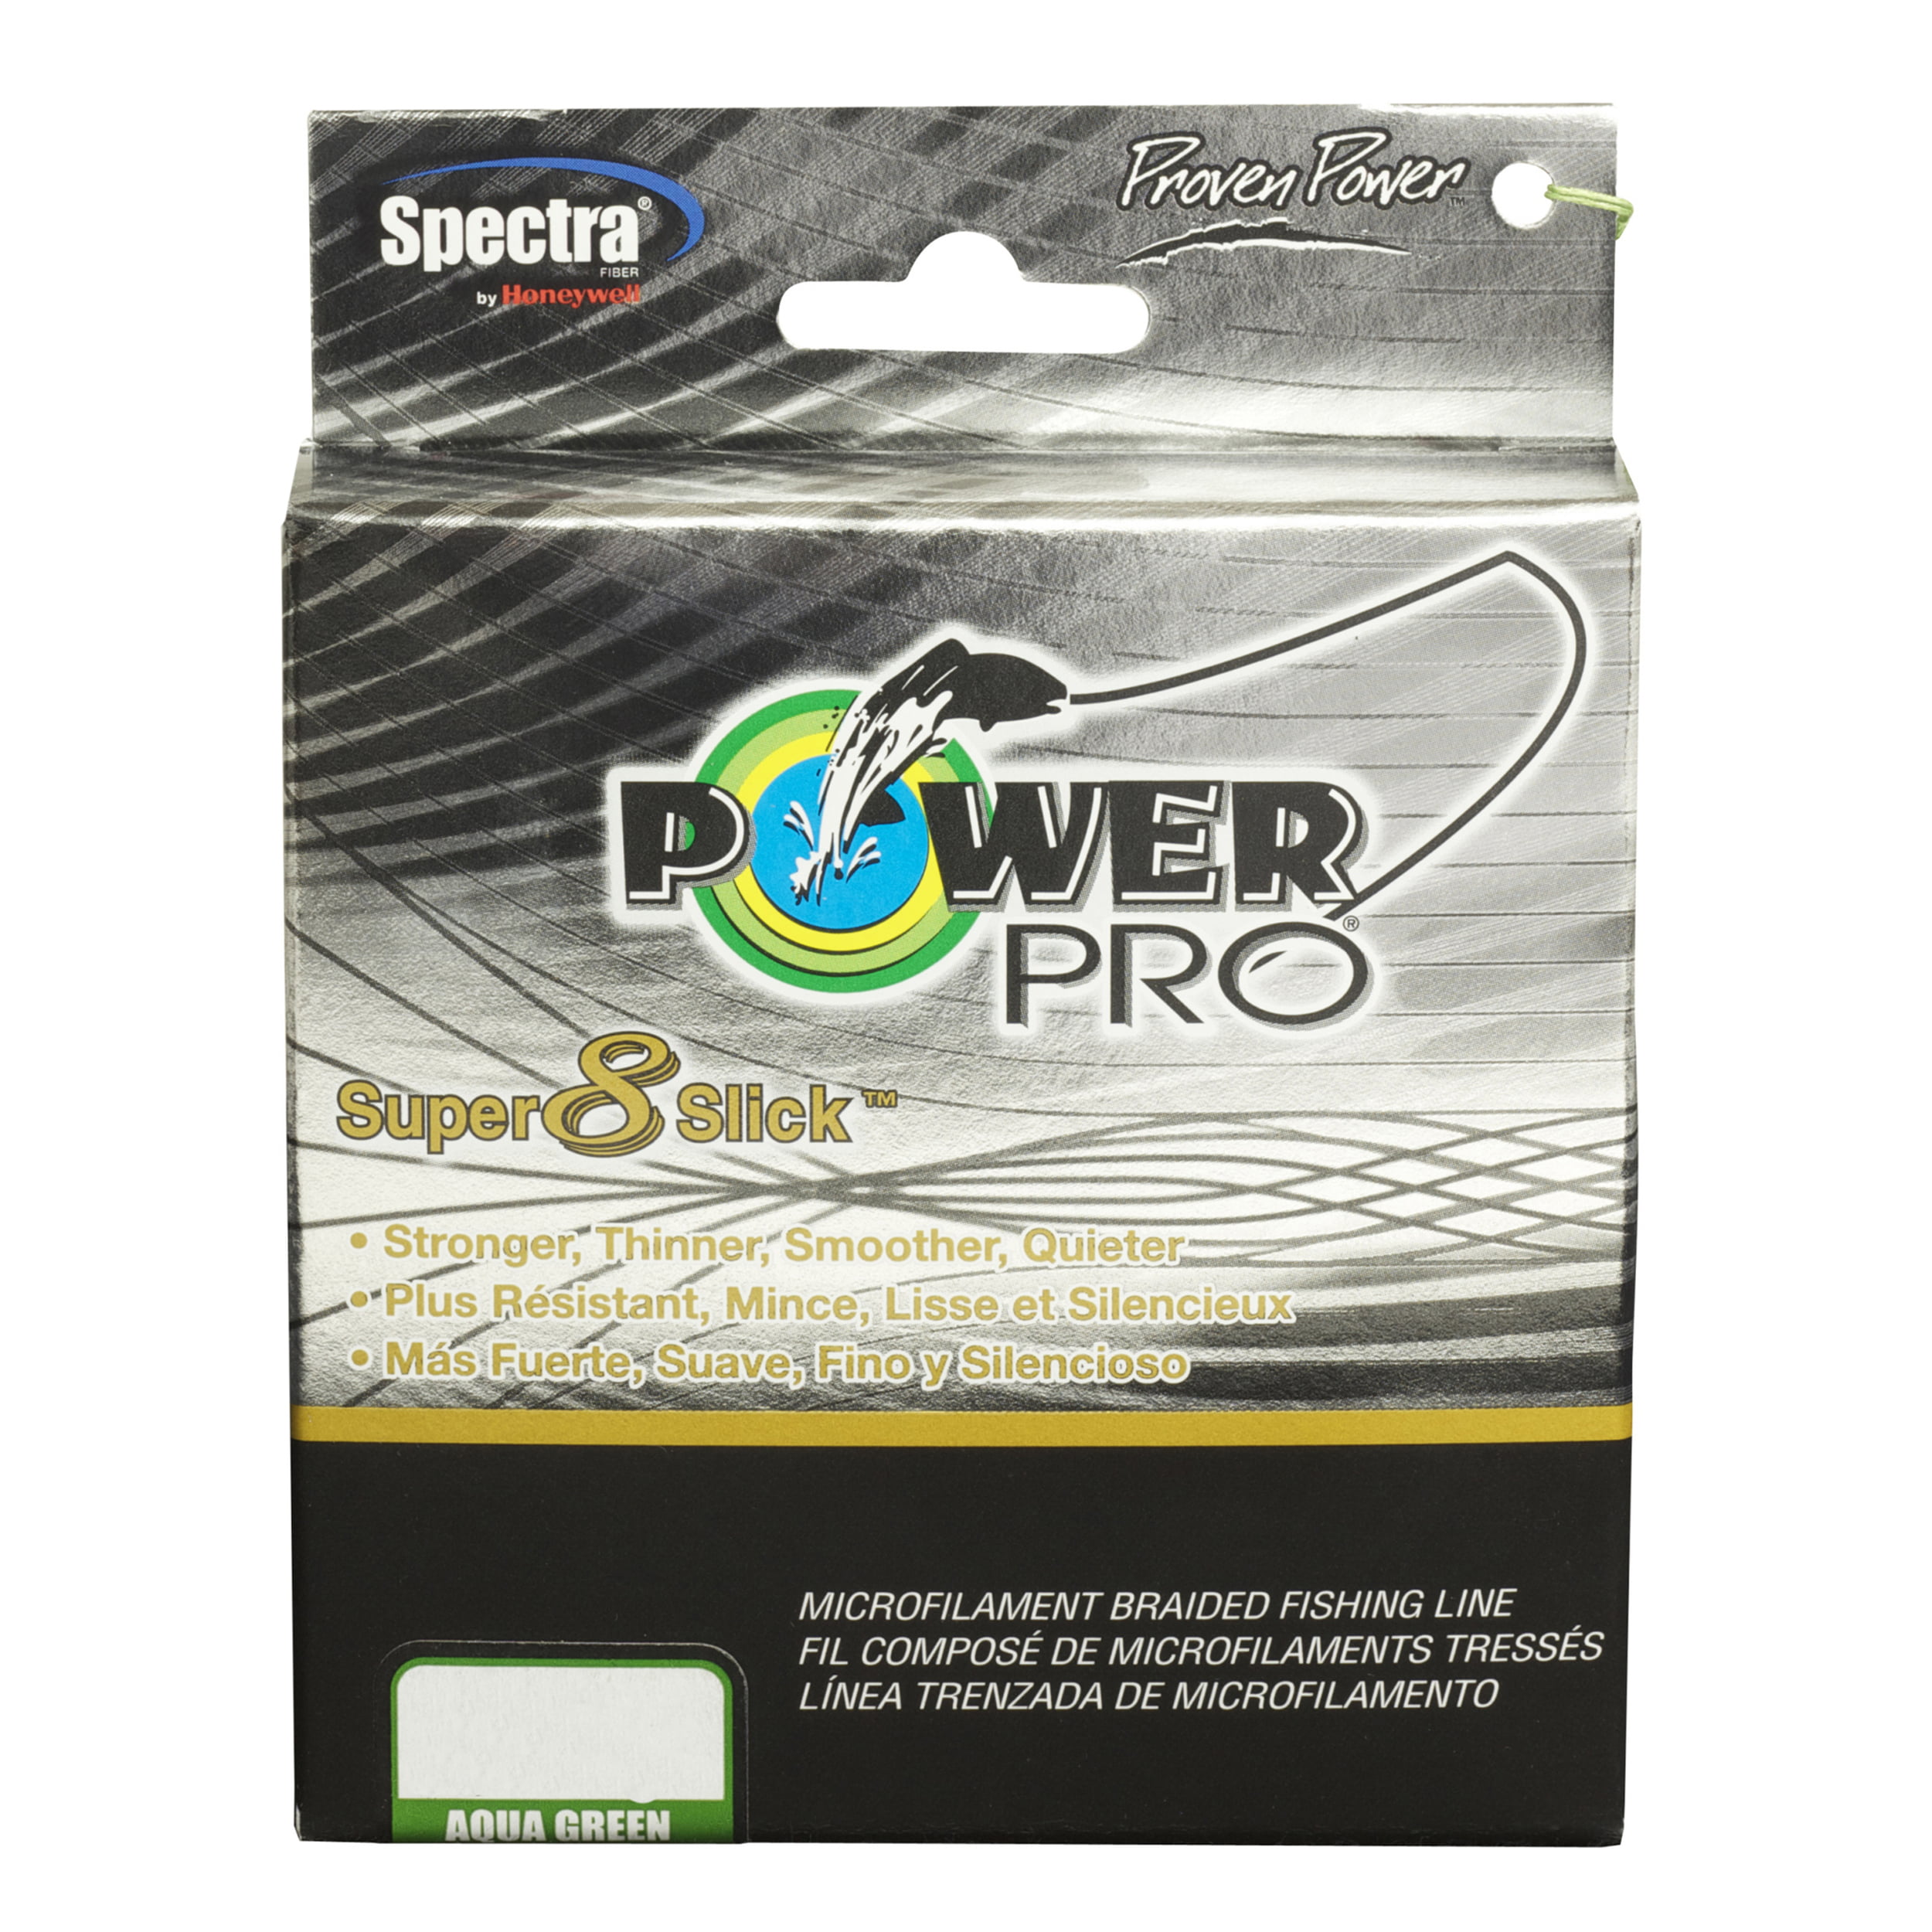 Power Pro PowerPro Super 8 Slick Braided Line 300 Yards, 80 lbs